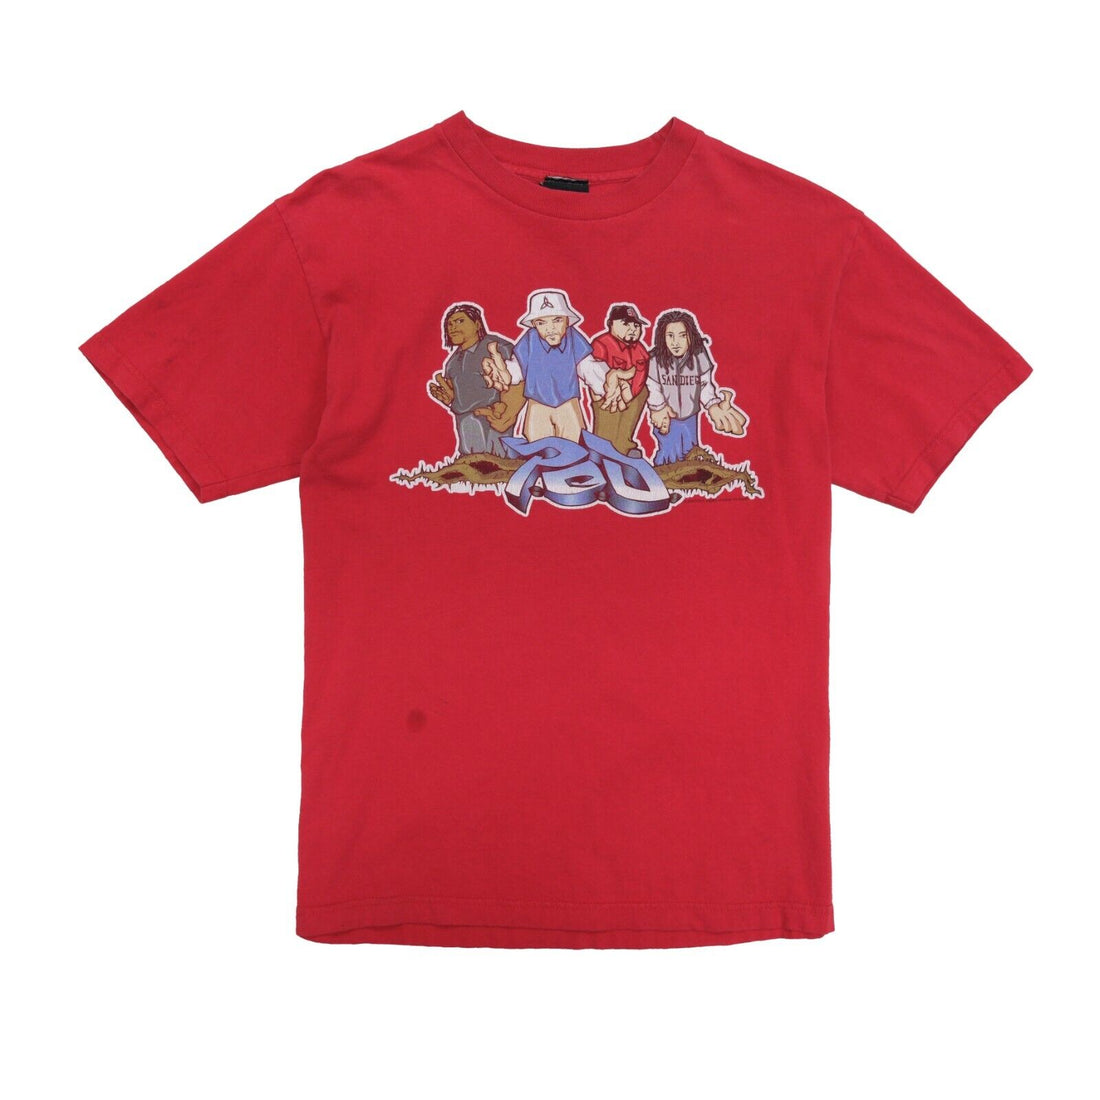 Vintage POD Payable on Death Giant T-Shirt Size Medium Red 2000 Band Tee Cartoon